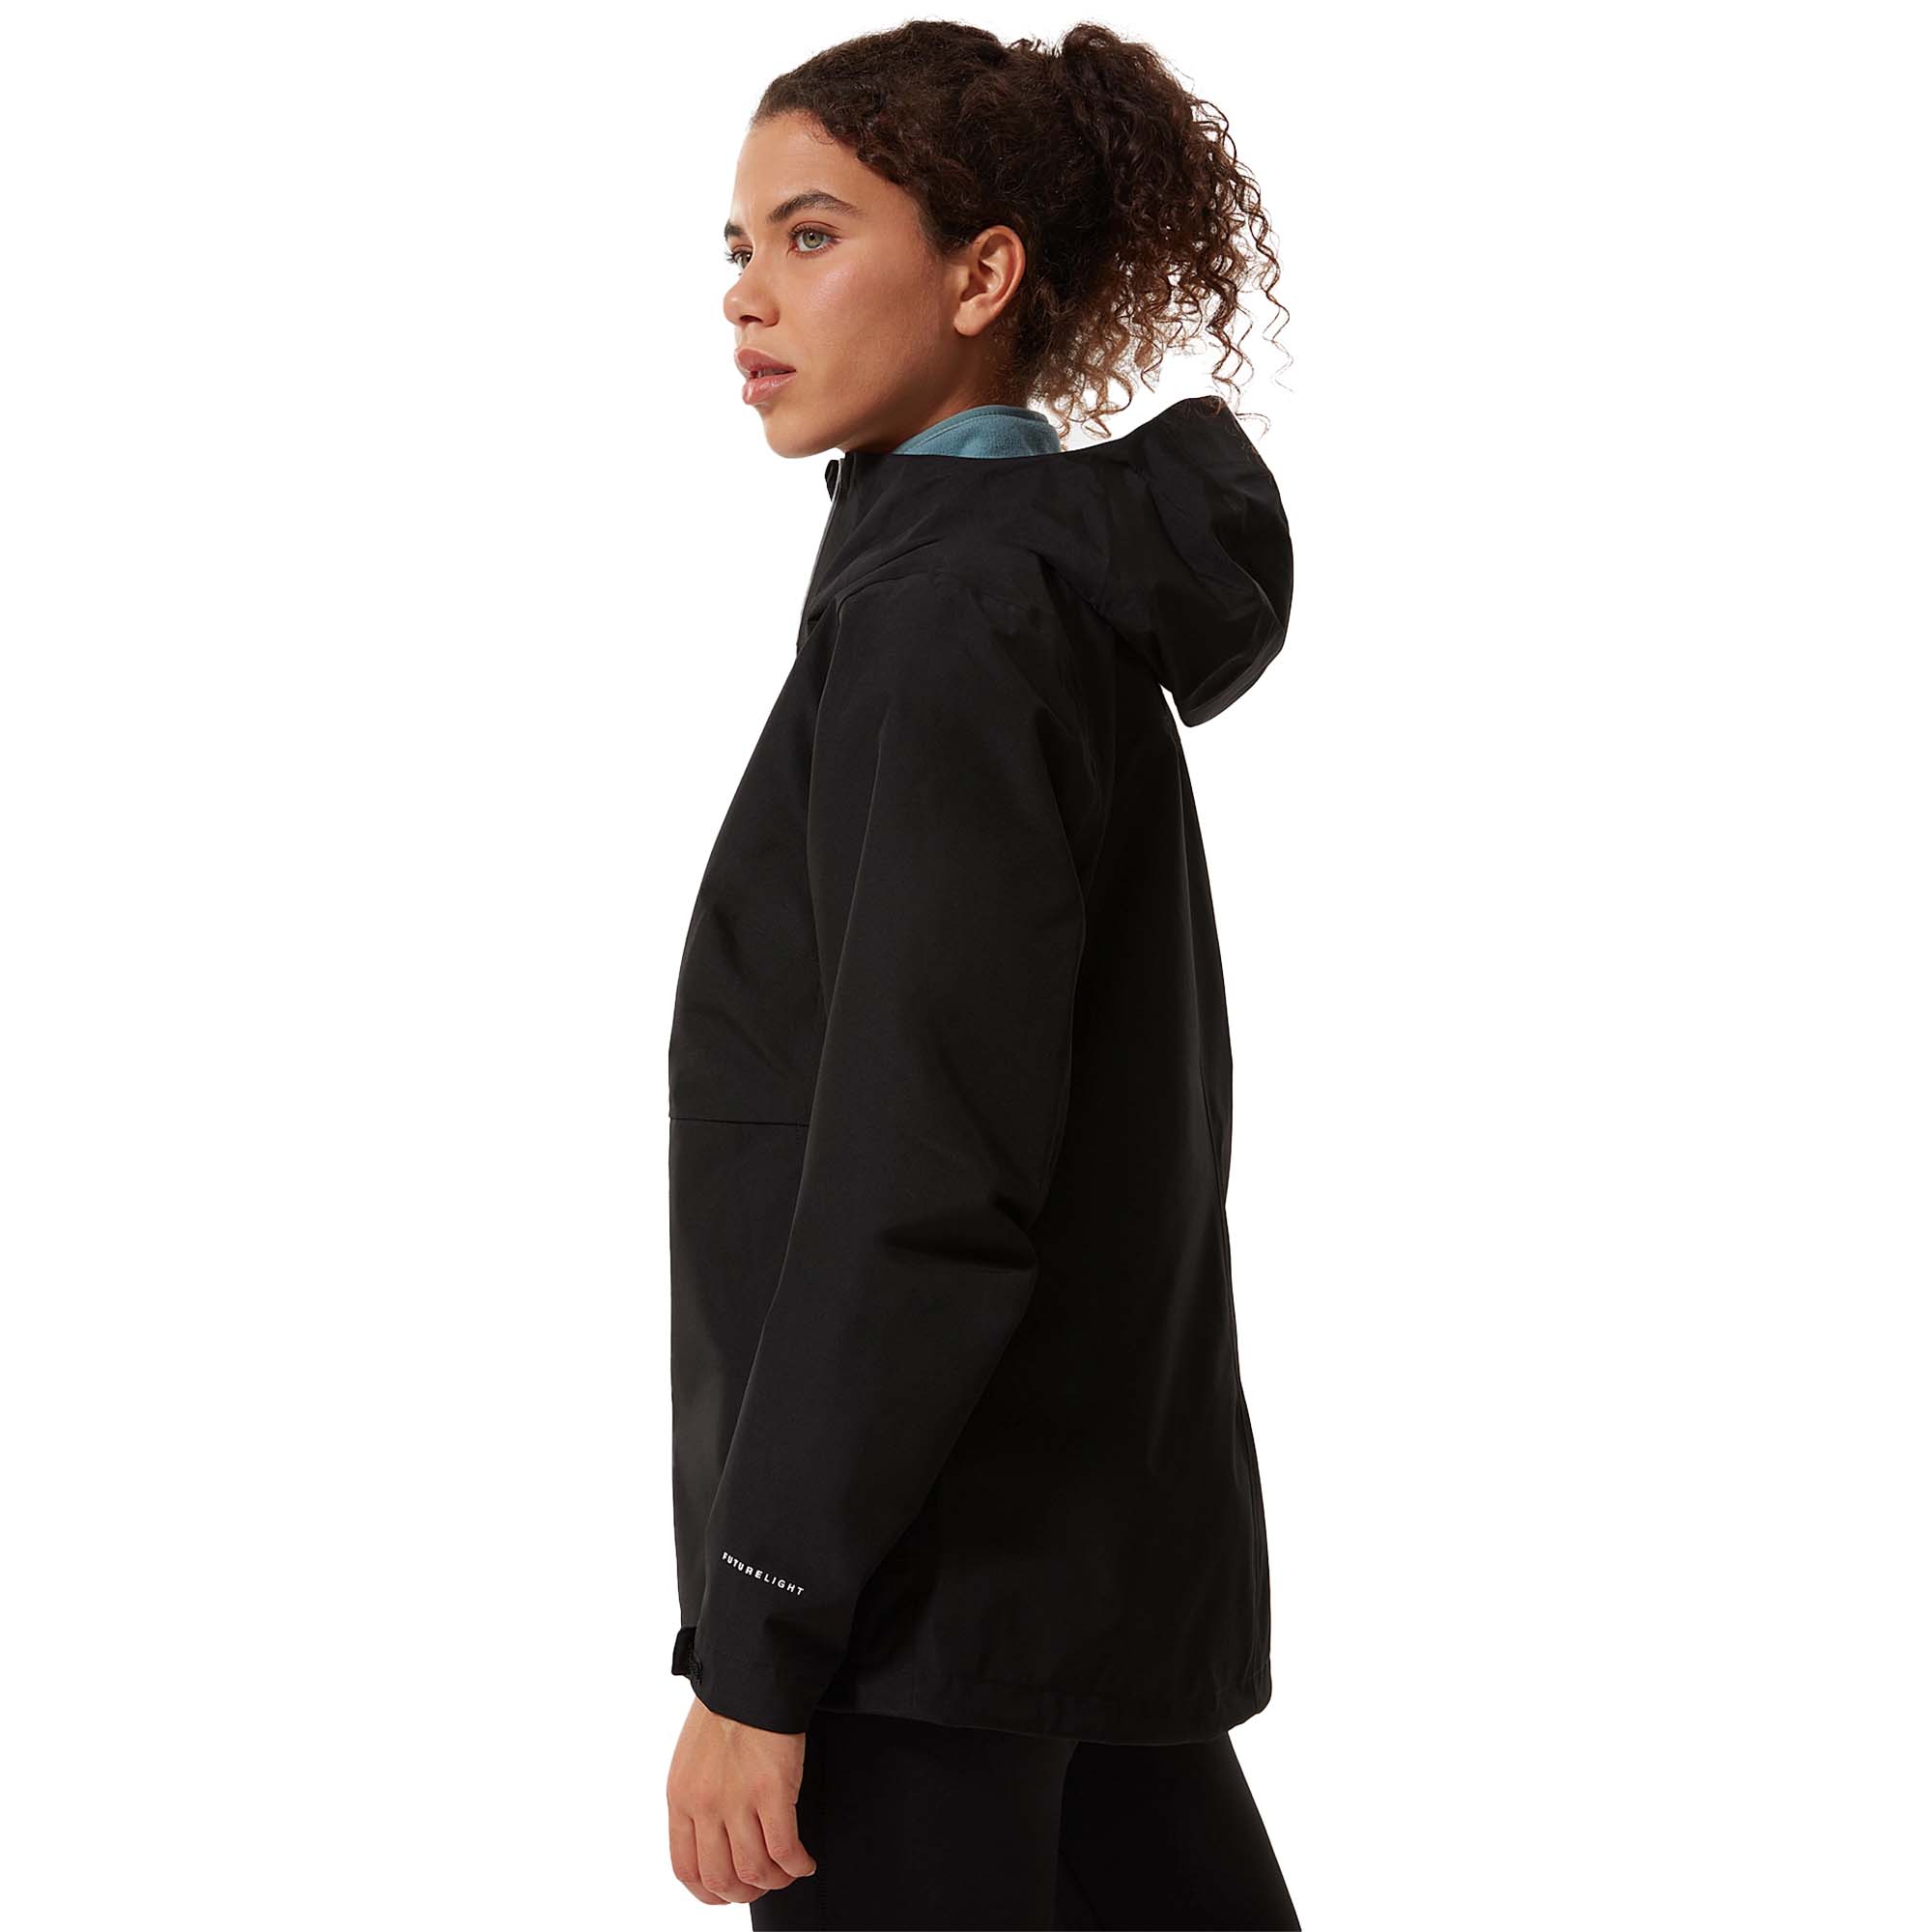 The North Face Dryzzle Women's Futurelight Jacket